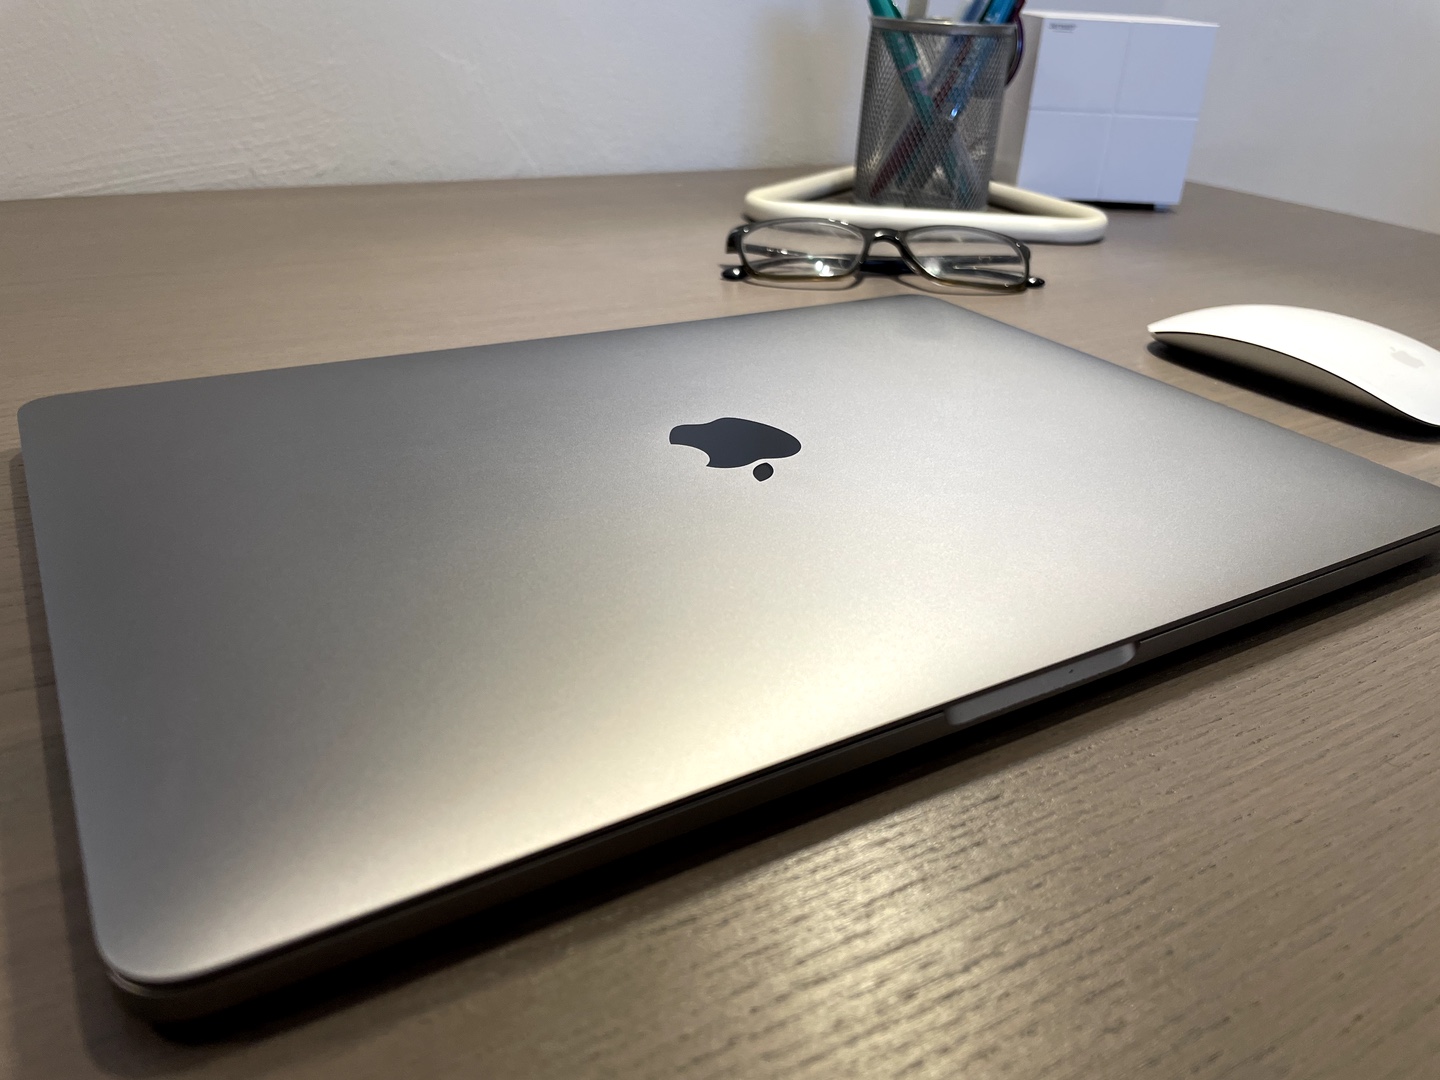 computadoras y laptops - MacBook Pro (13-inch, 2017, Two Thunderbolt 3 ports)
con Apple Magic Mouse 2